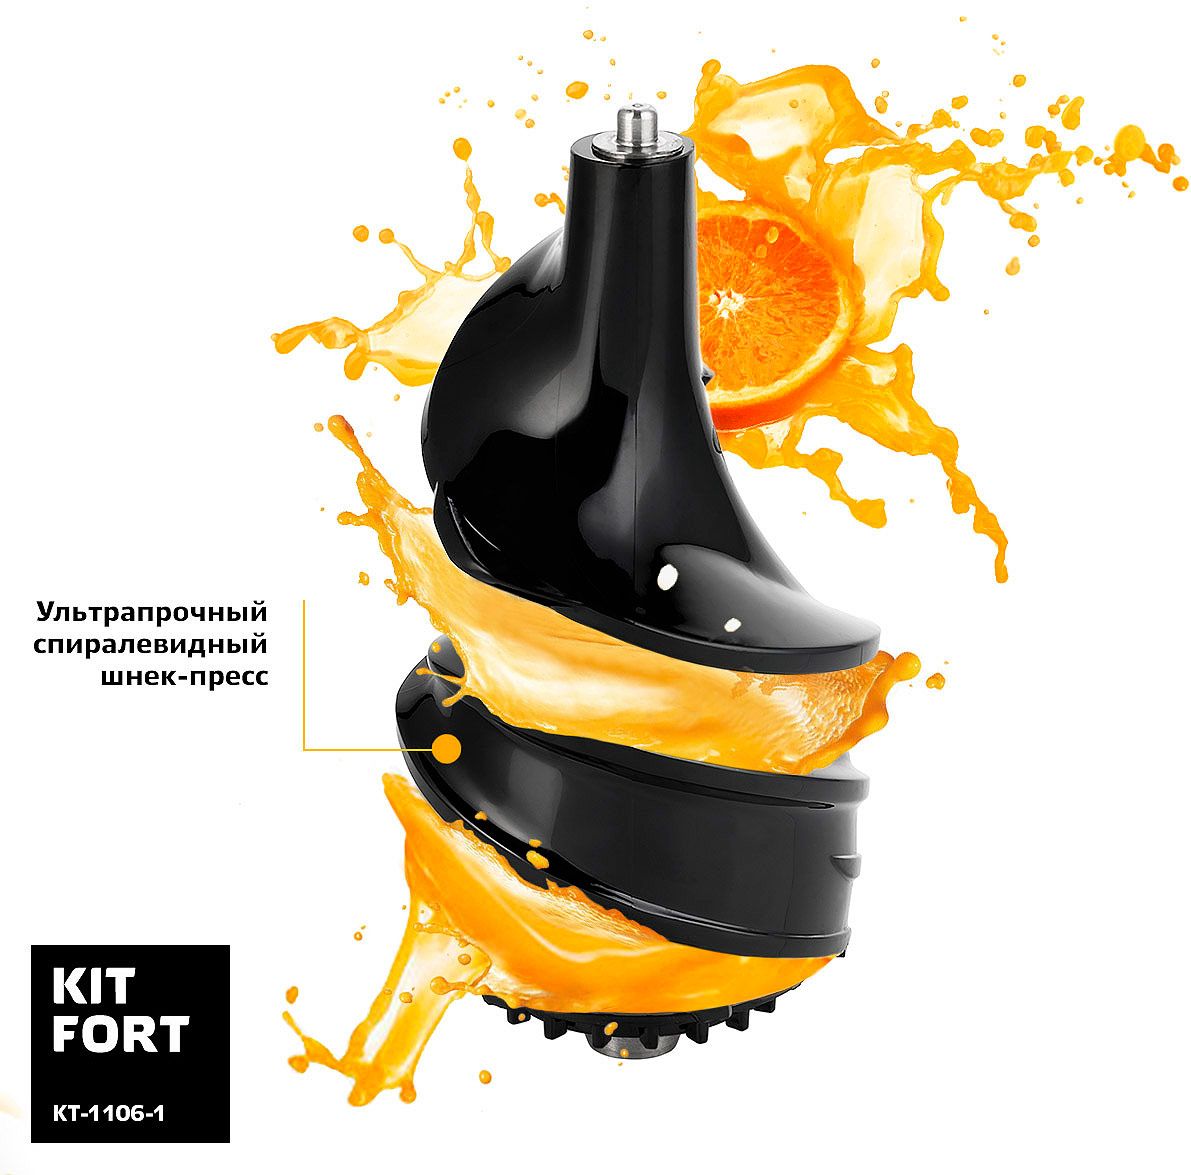  Kitfort -1106-1, : 